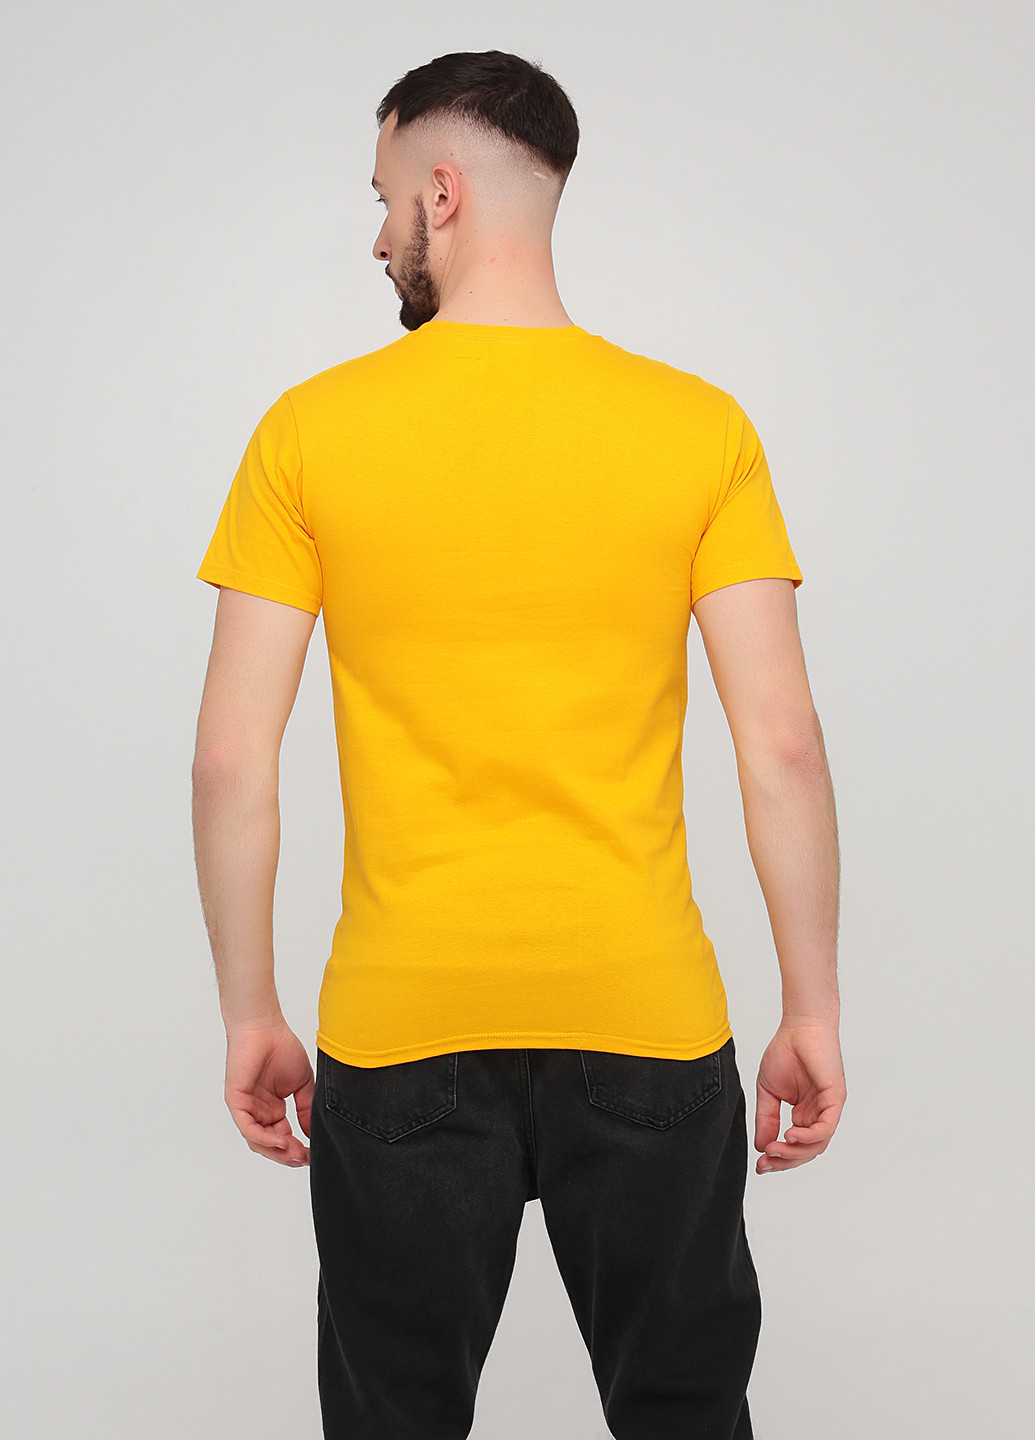 Желтая футболка Hanes